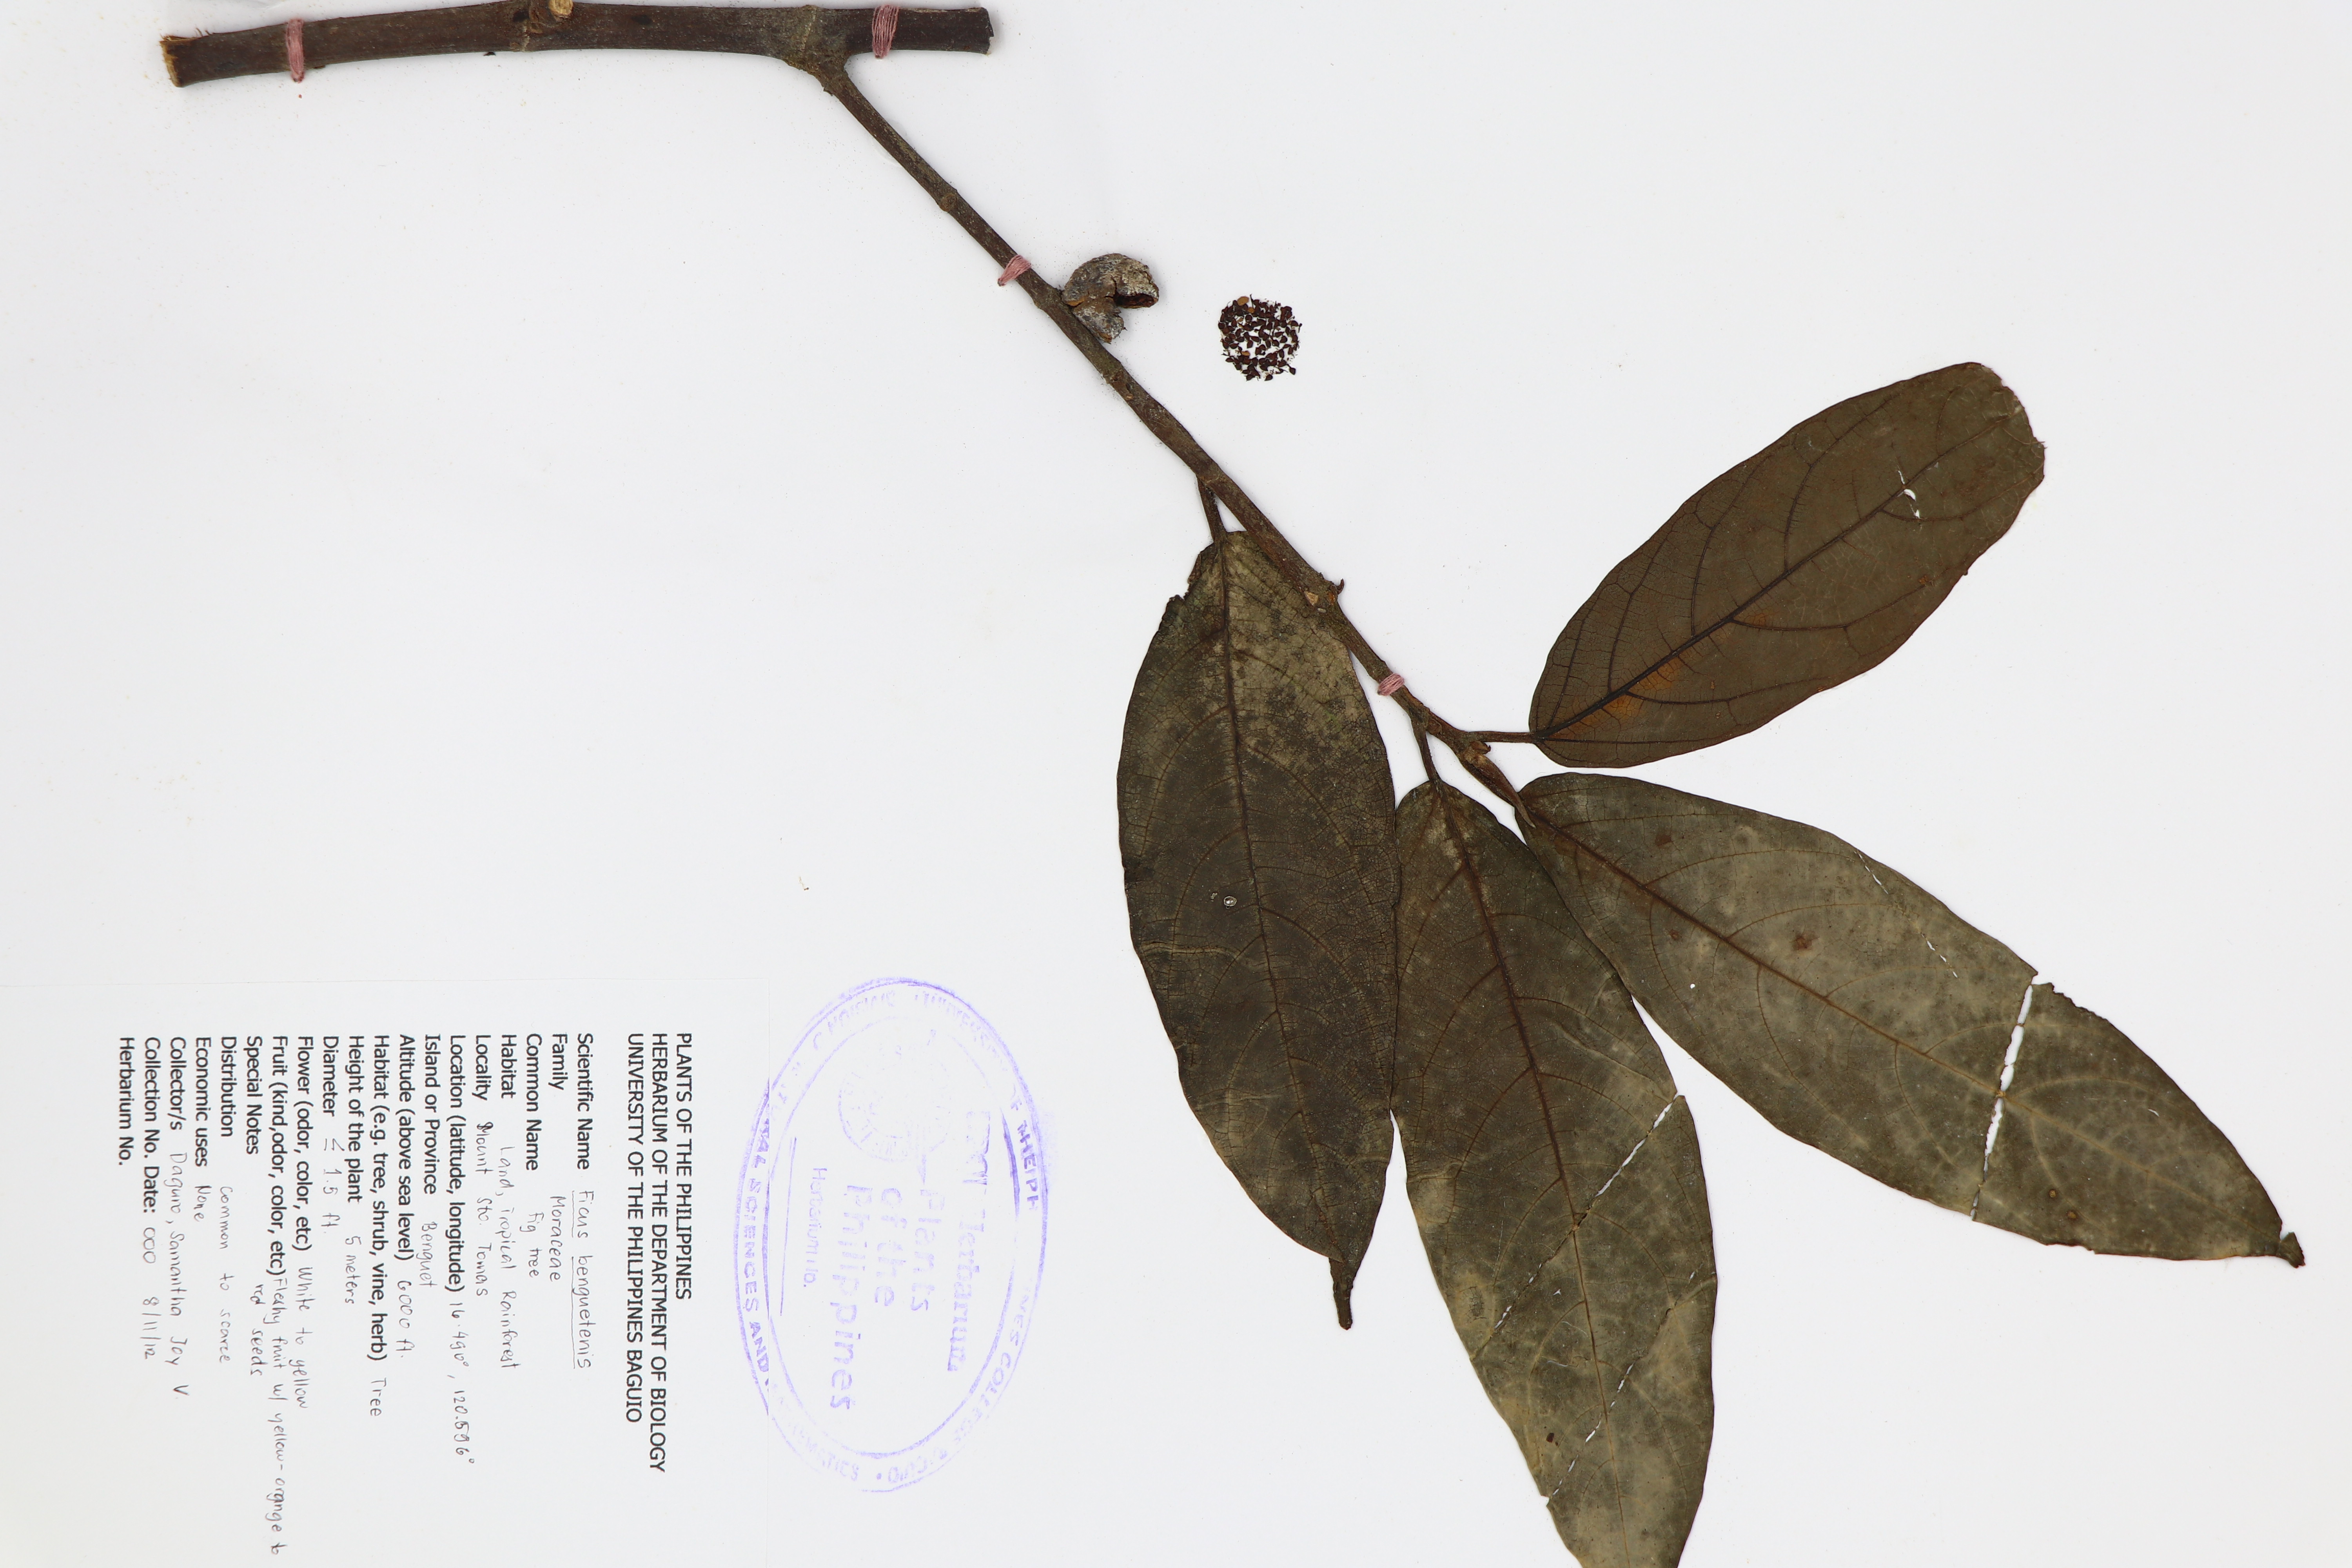 Ficus benguetensis